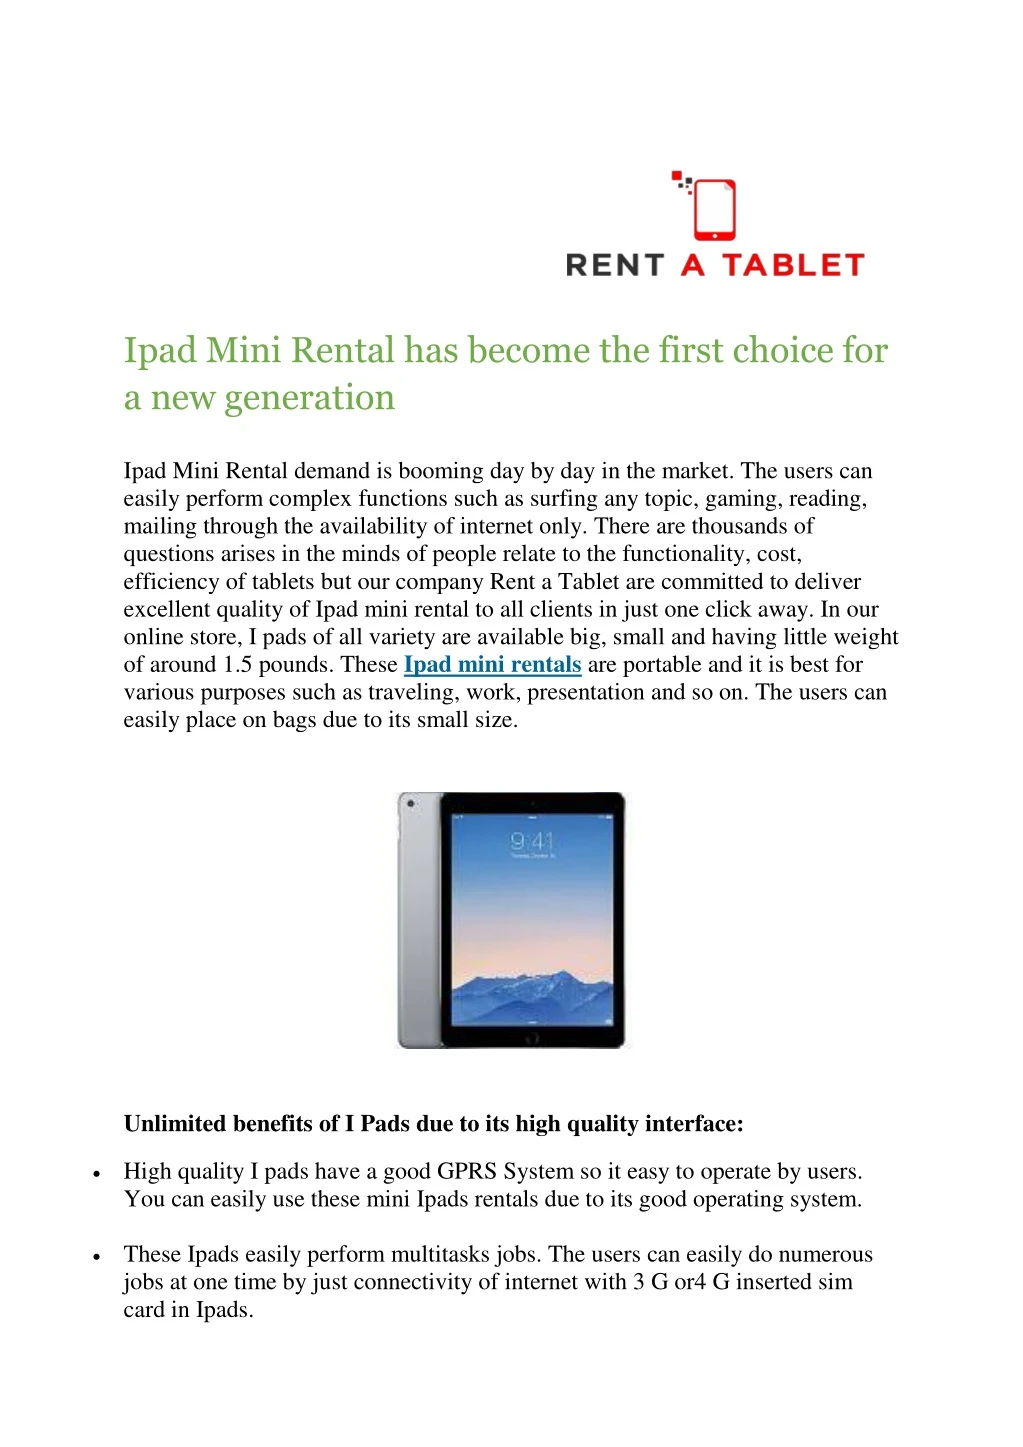 ipad mini rental has become the first choice